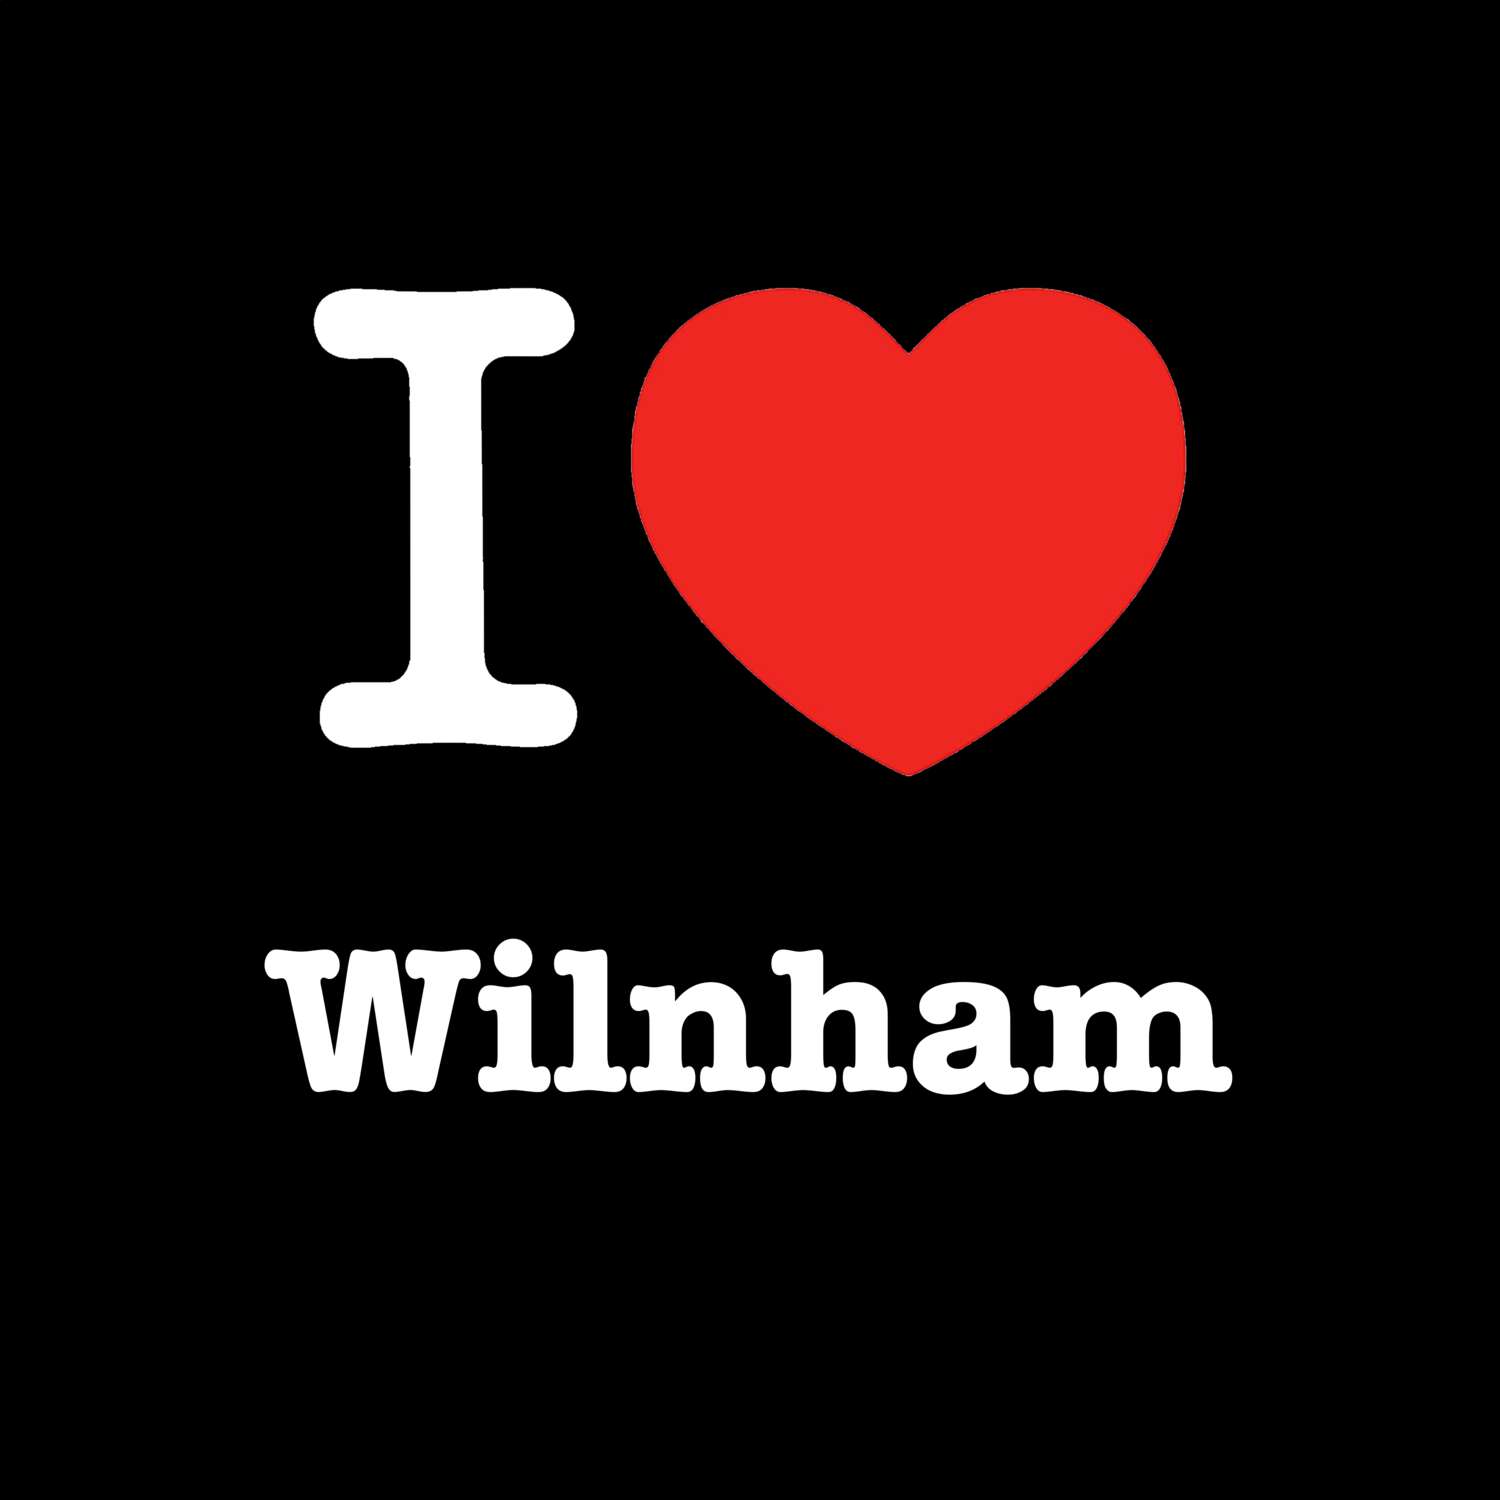 Wilnham T-Shirt »I love«